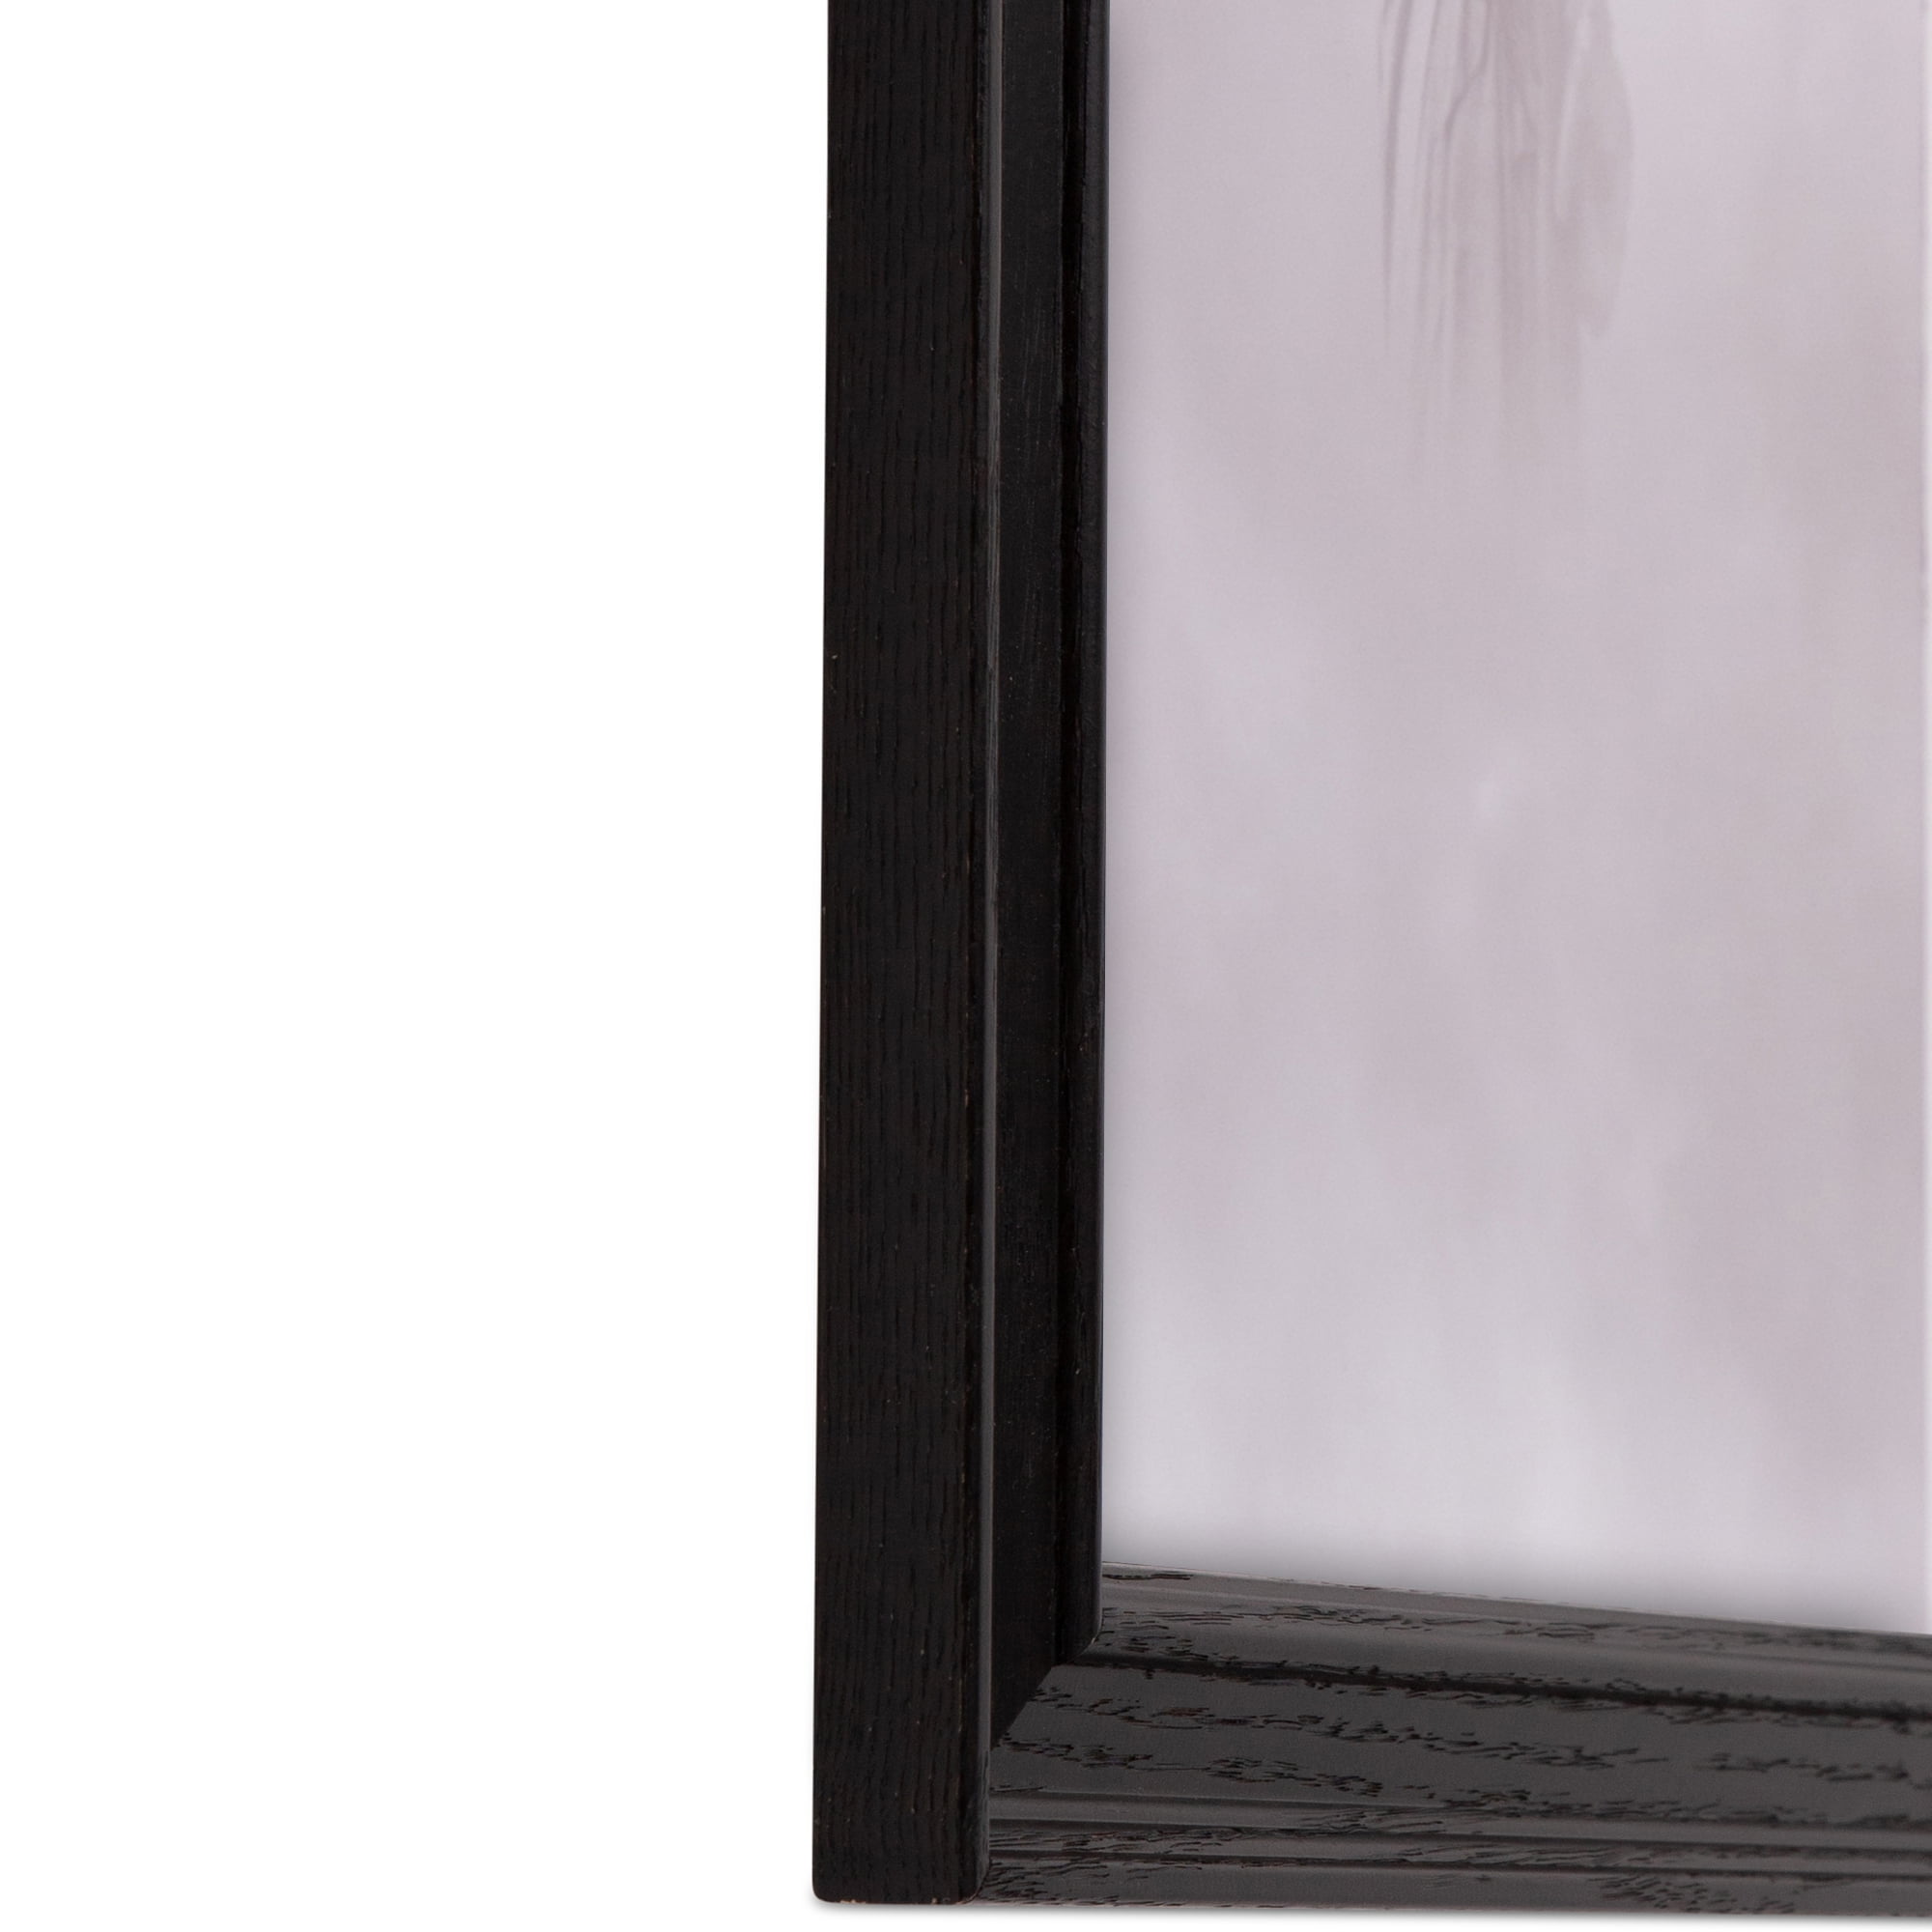 ArtToFrames 4x10 inch Black Picture Frame, Black Wood Poster Frame (4628), Size: 4 x 10